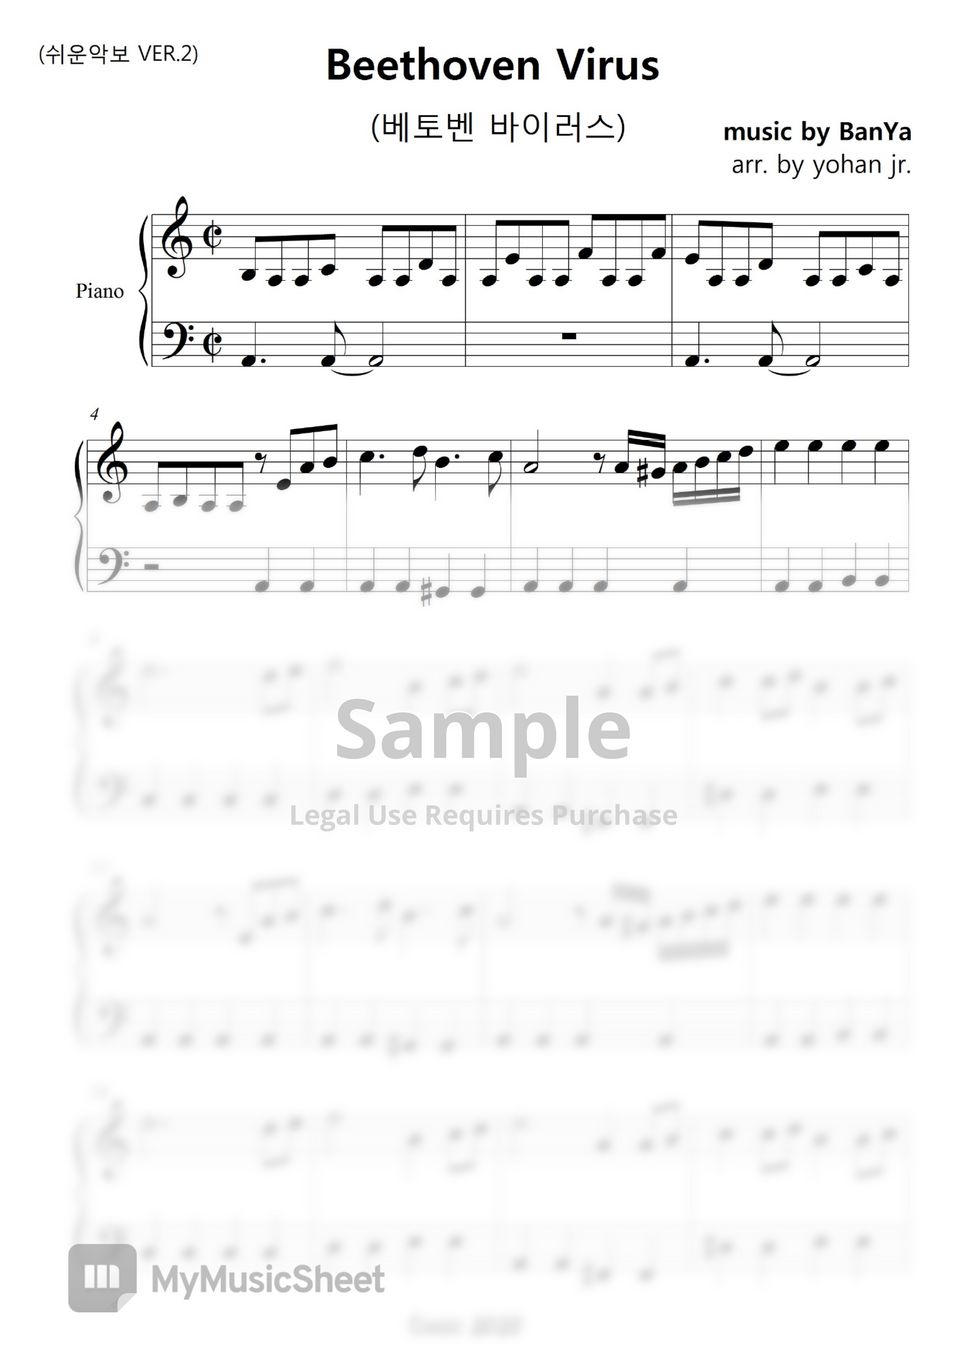 Banya - Beethoven Virus (easy piano ver.2) by classic2020